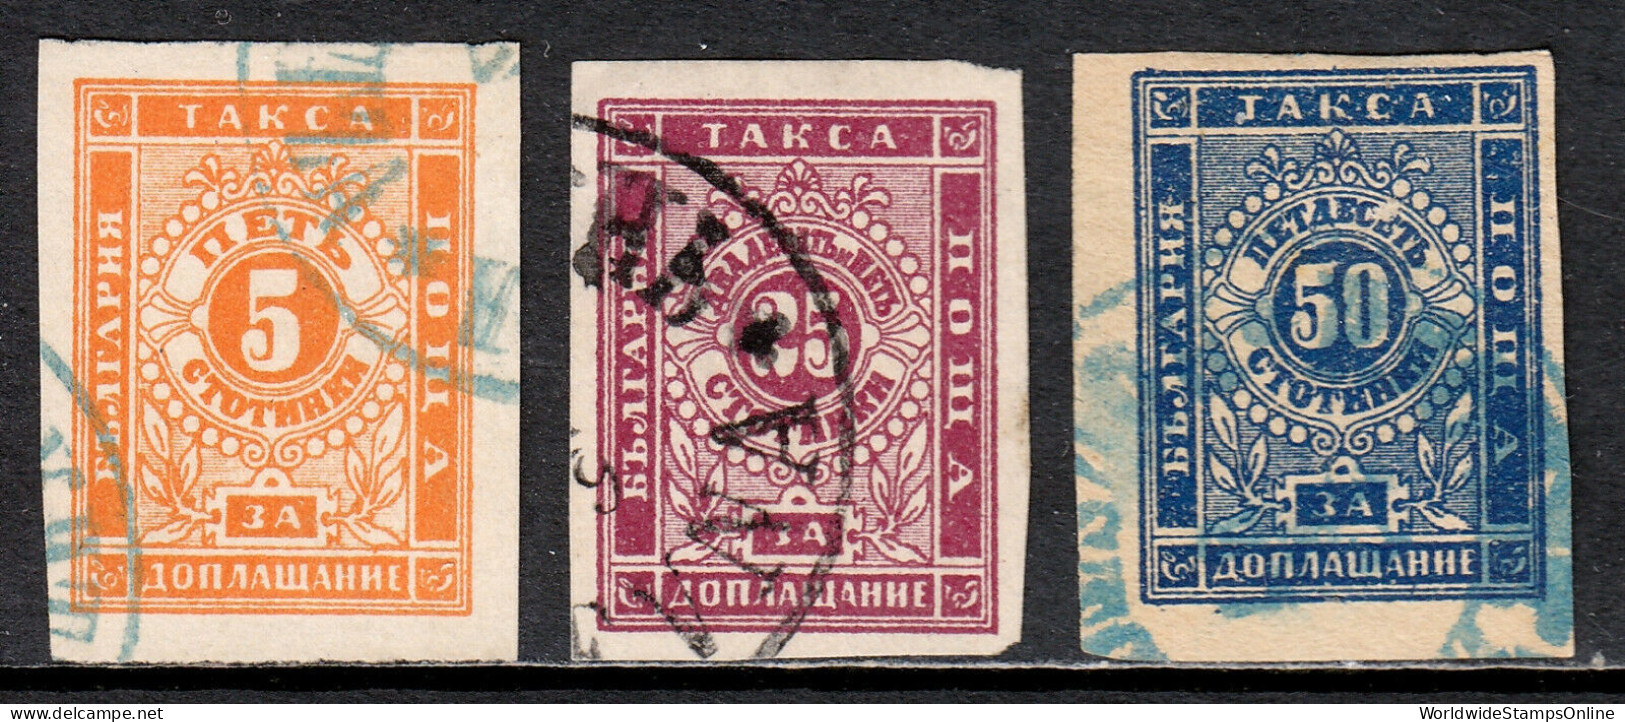 BULGARIA — SCOTT J4-J6 — 1886 POSTAGE DUE SET — USED — SCV $57 - Timbres-taxe